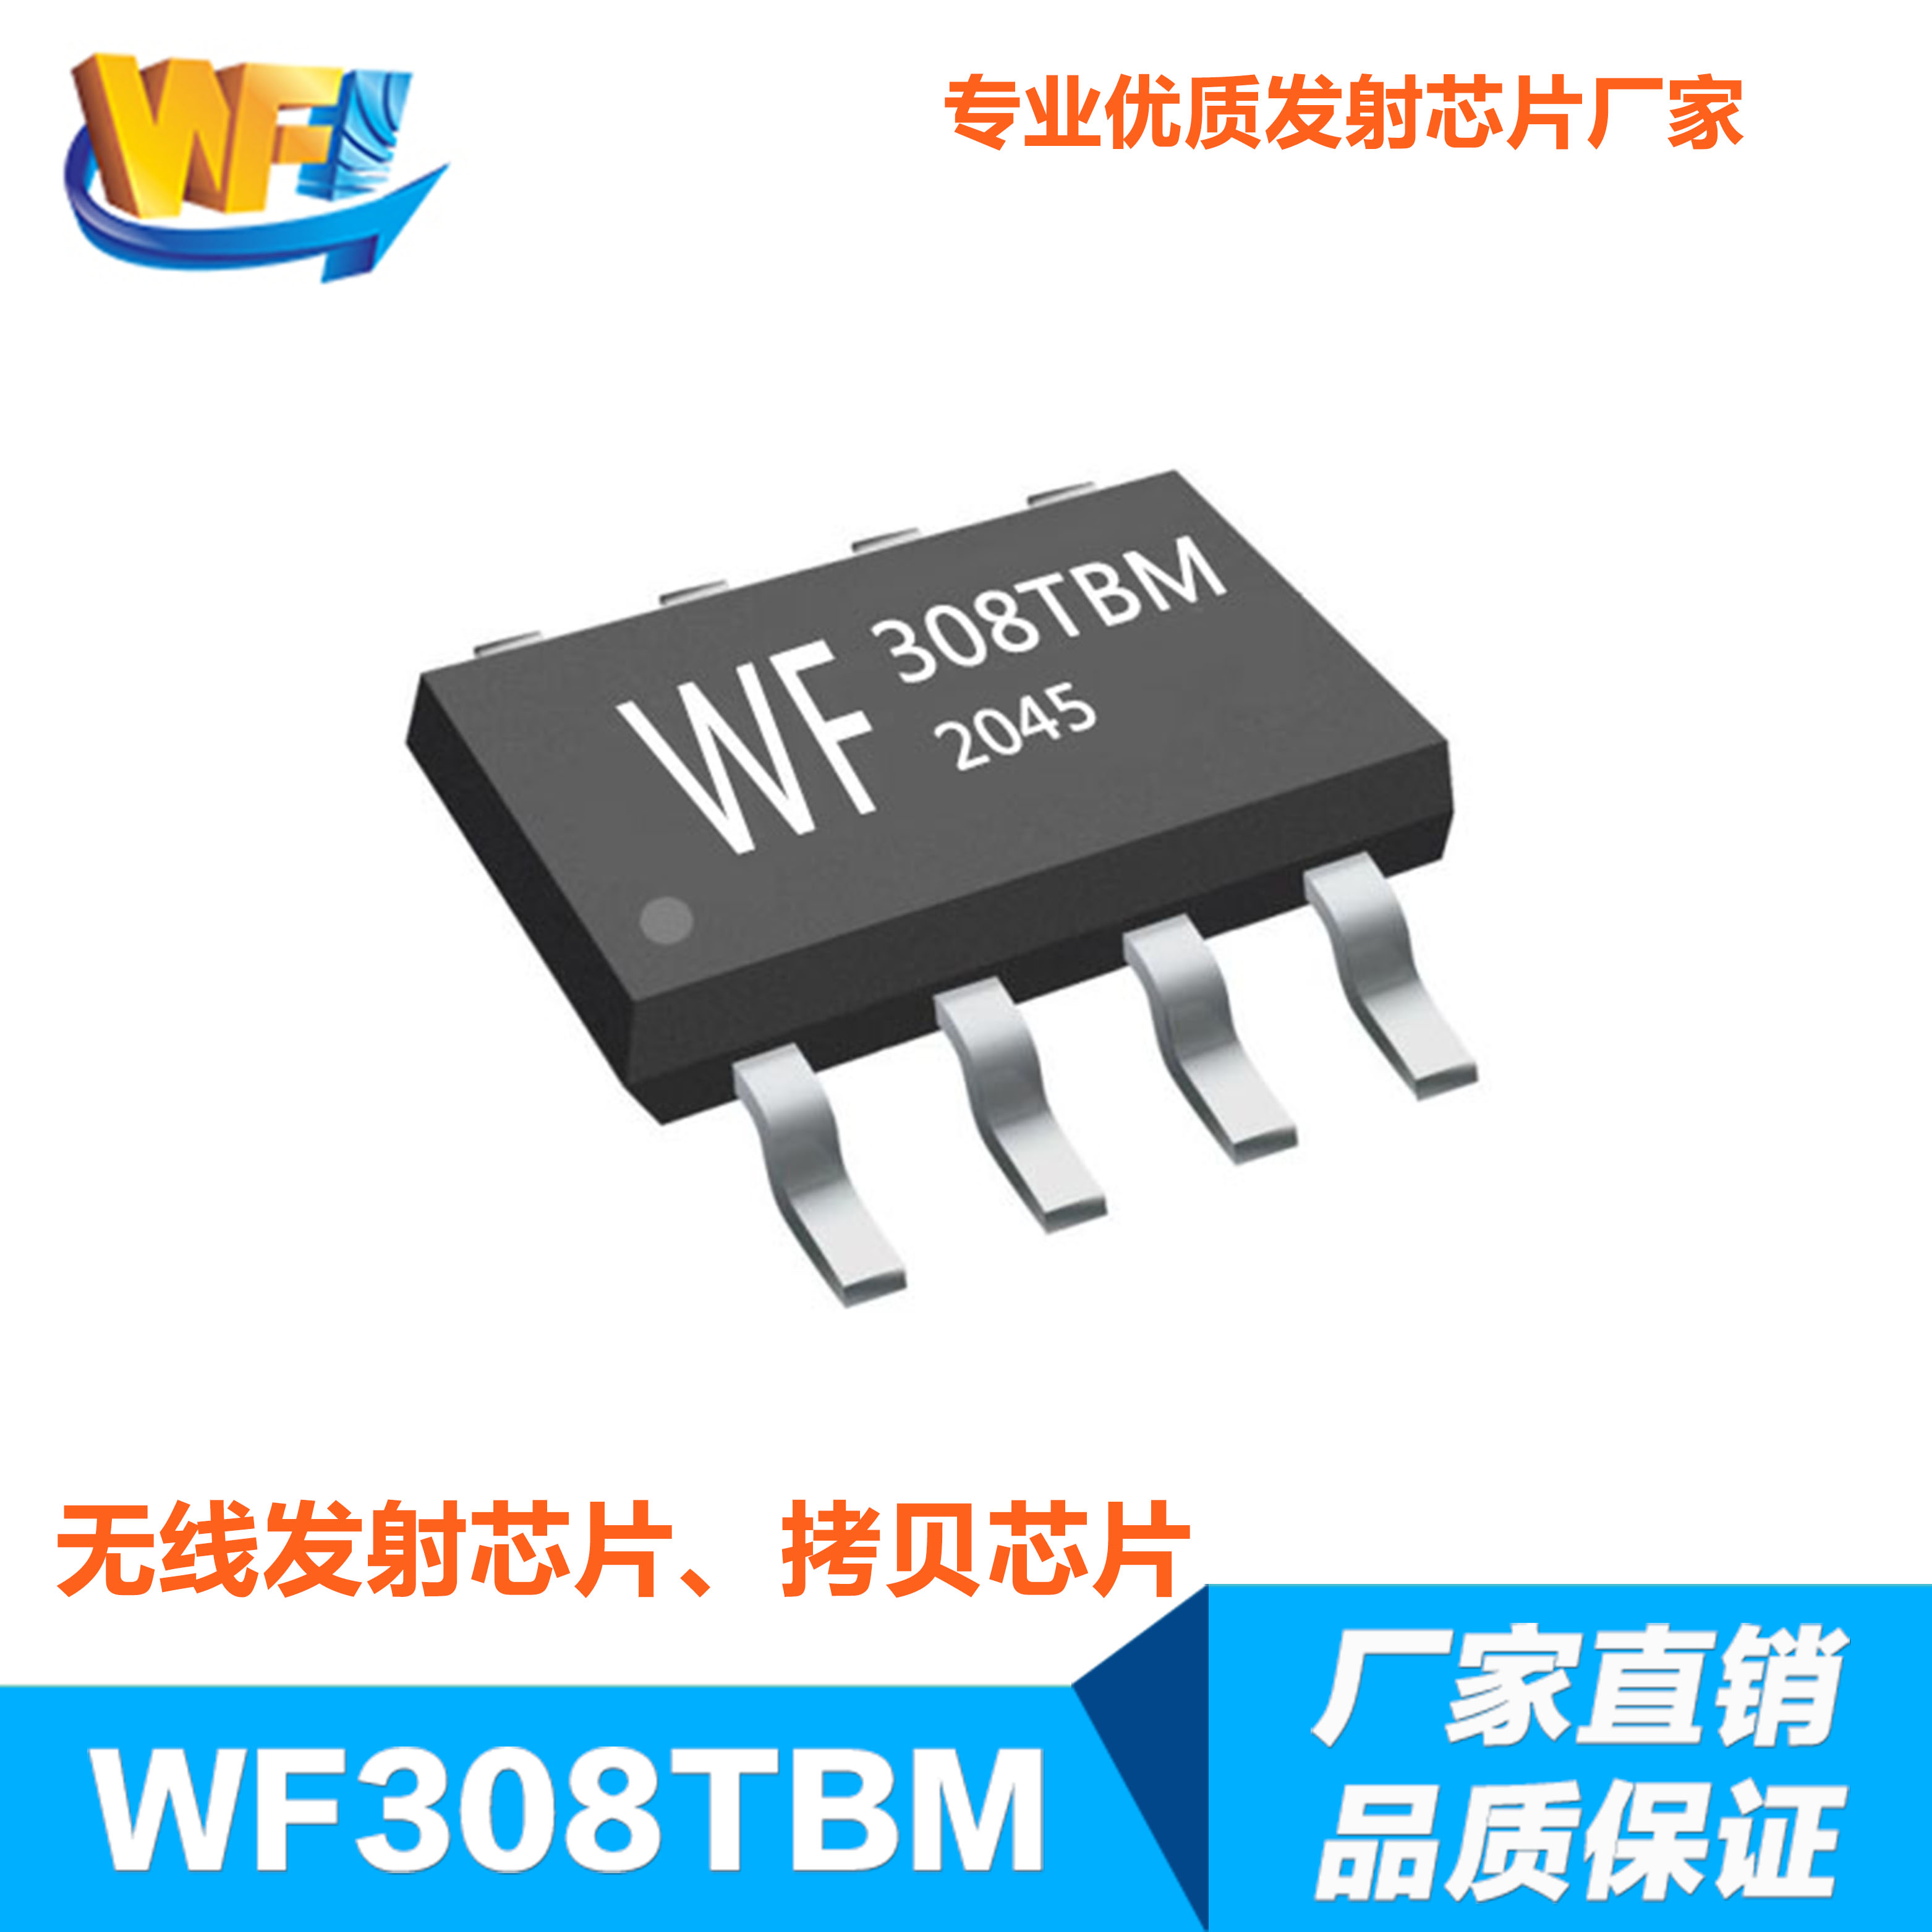 WF308TBM無線接收發射芯片